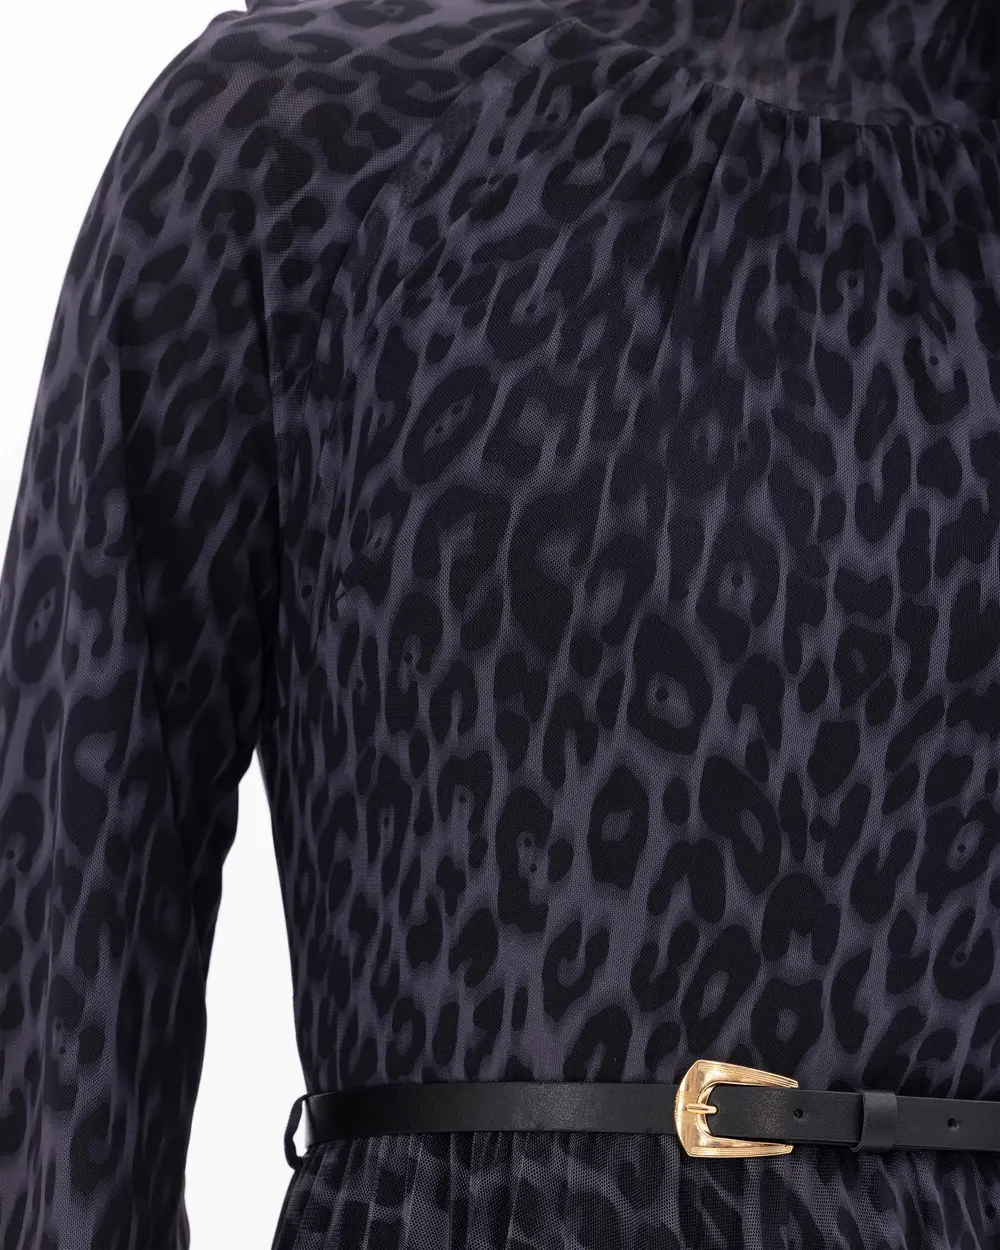 Leopard Print Belted Elastic Waist Dress